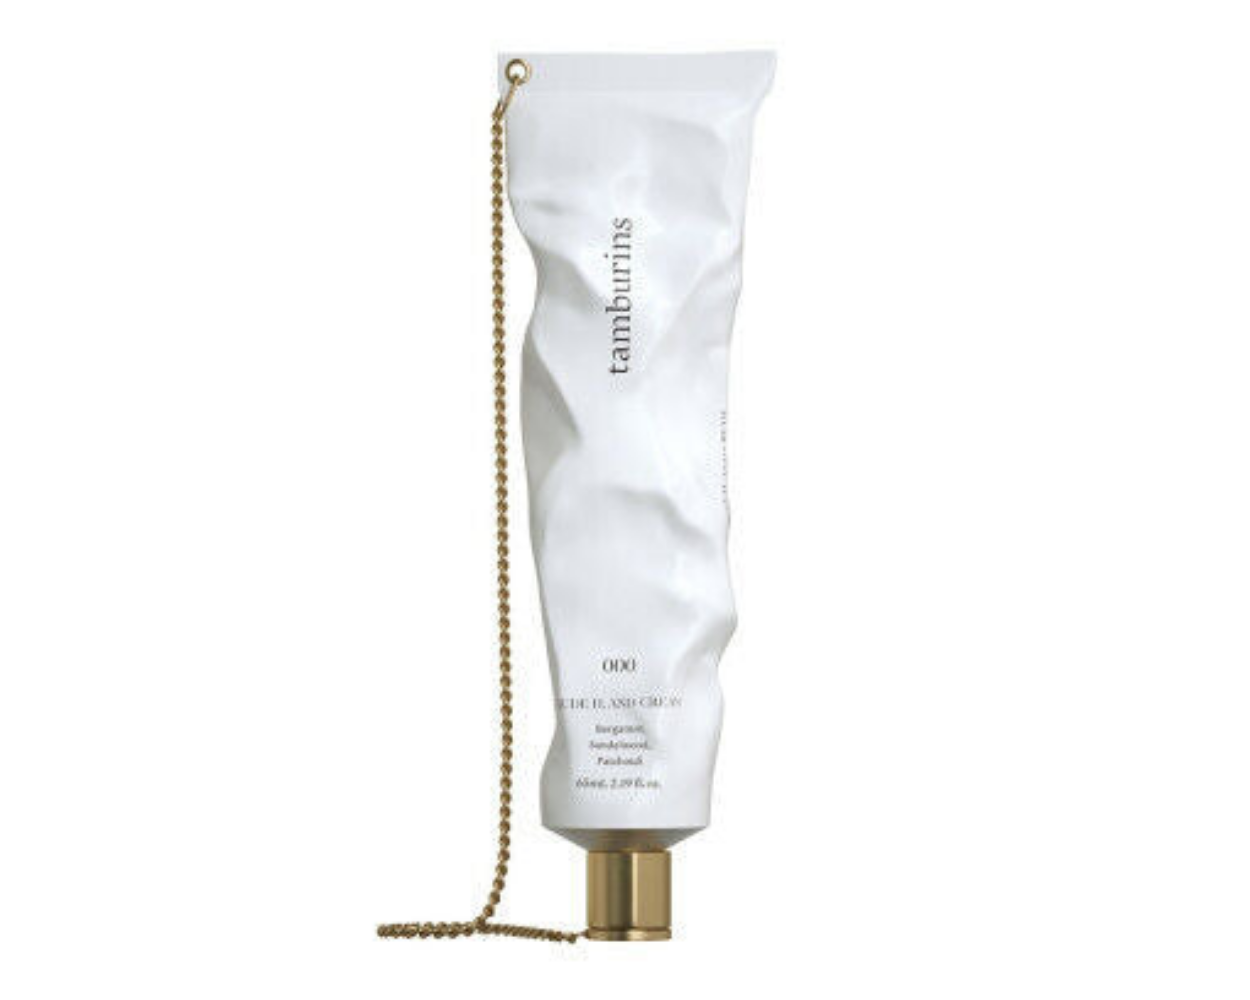 A 30ml tube of TAMBURINS Chain Hand Cream with a luxurious gold chain design.